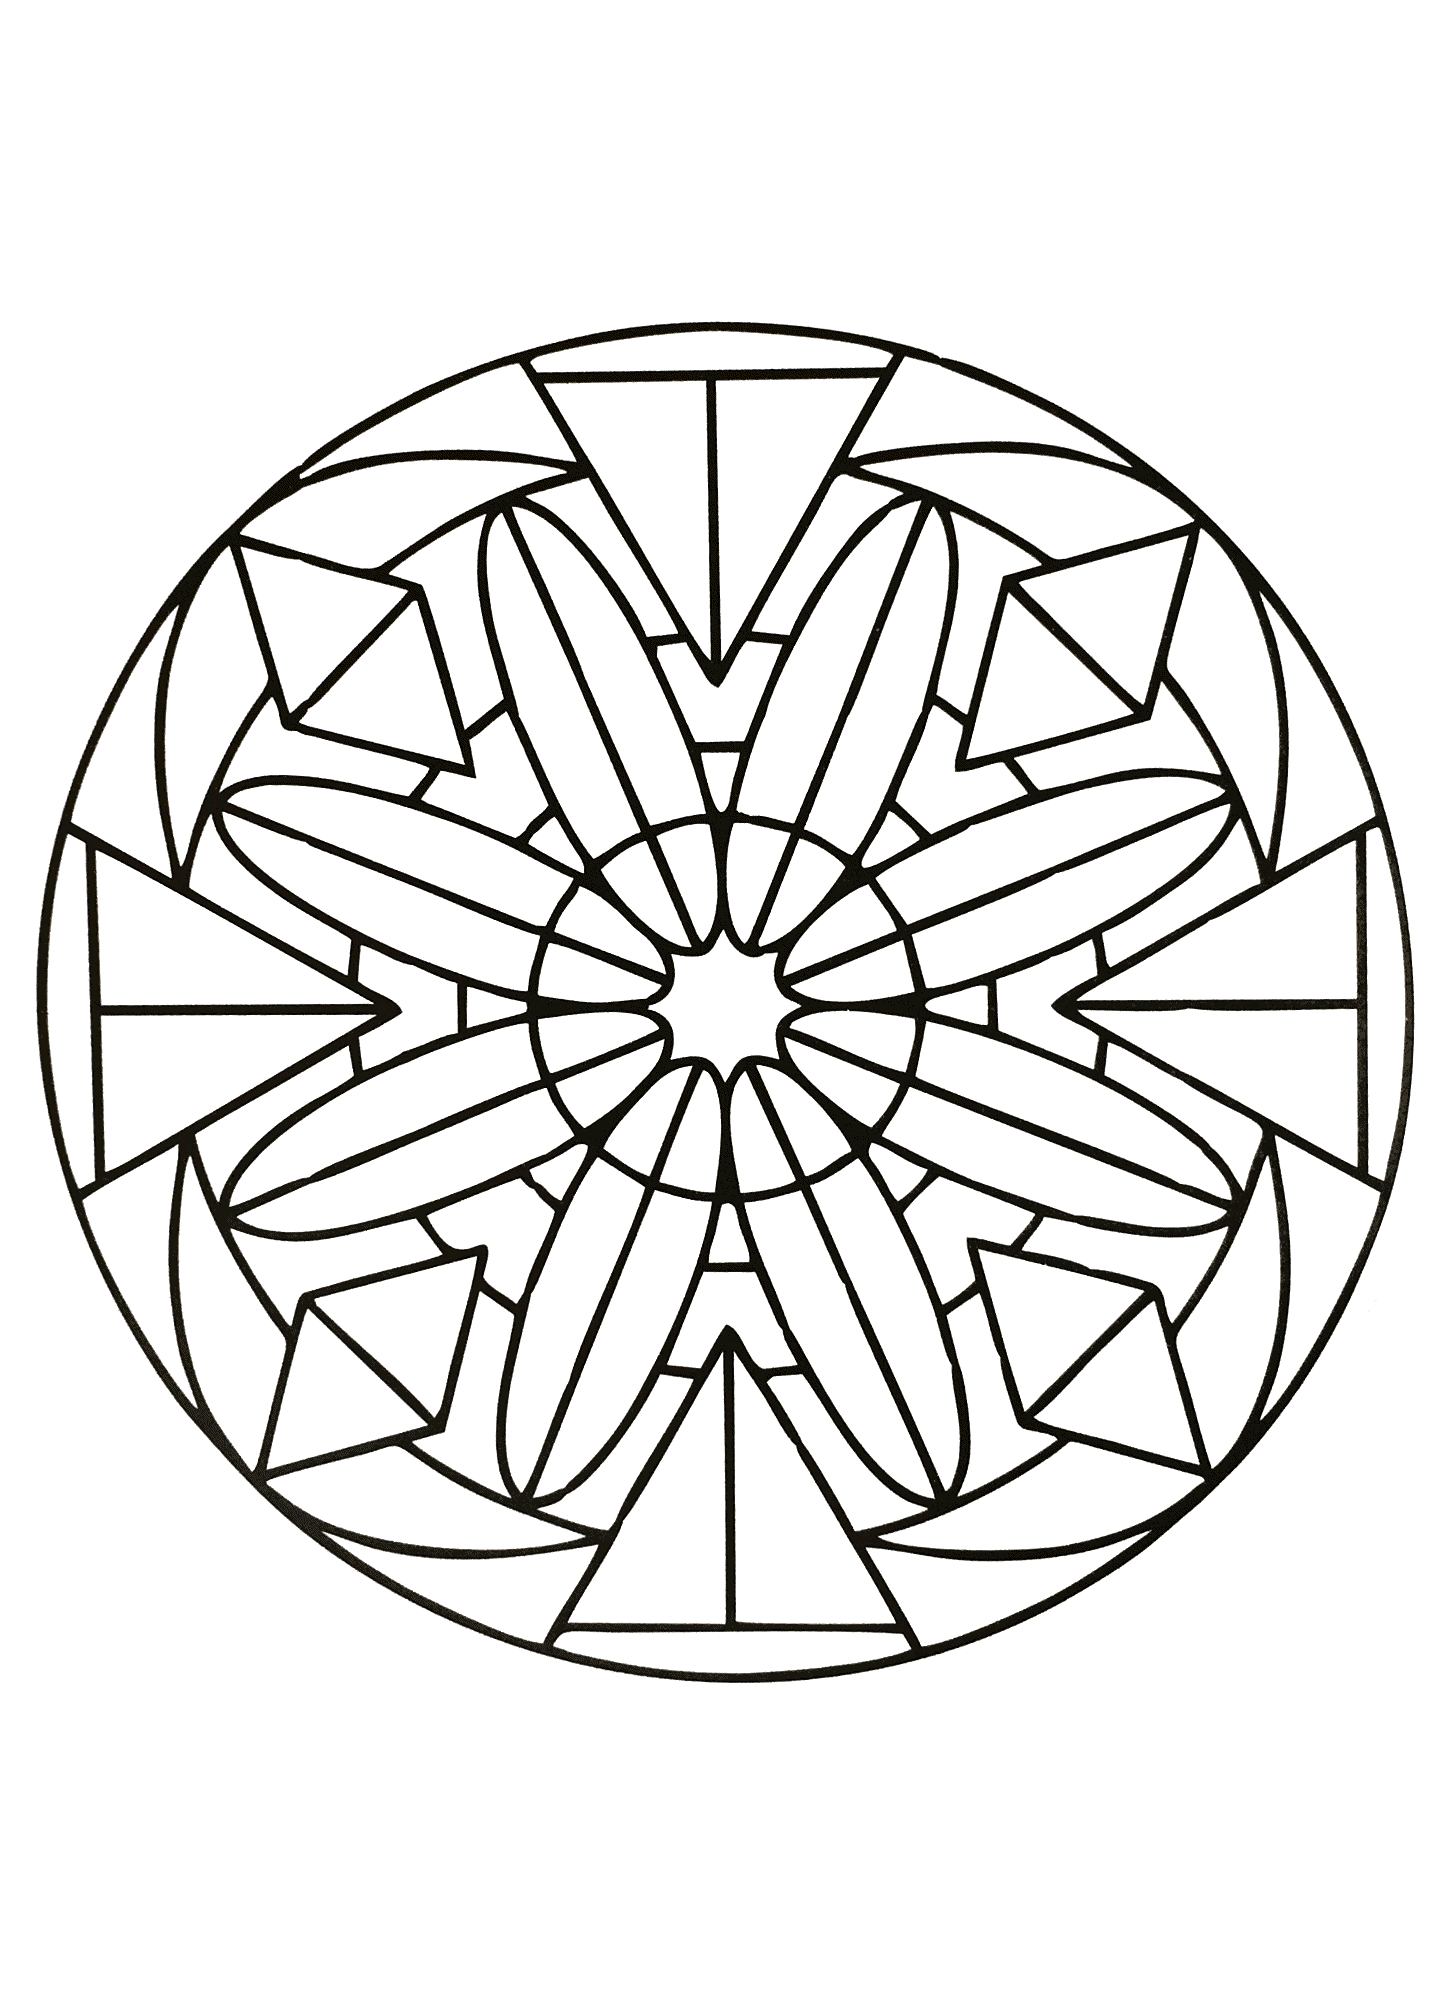 Simple & symmetric Mandala - Mandalas with Geometric patterns